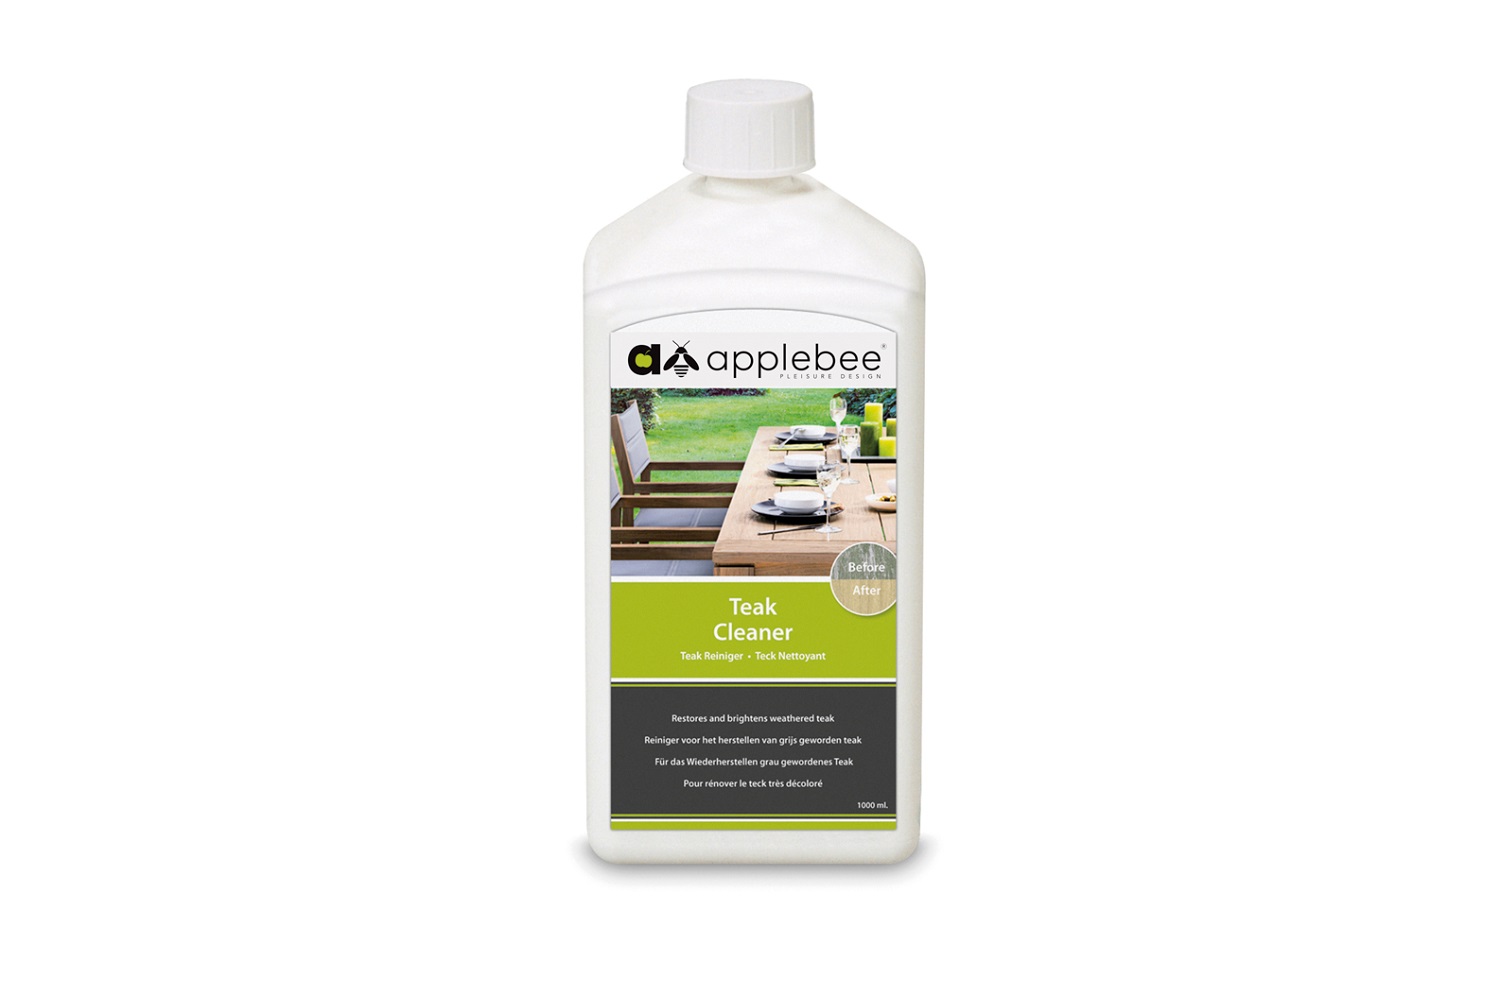 Applebee teak cleaner